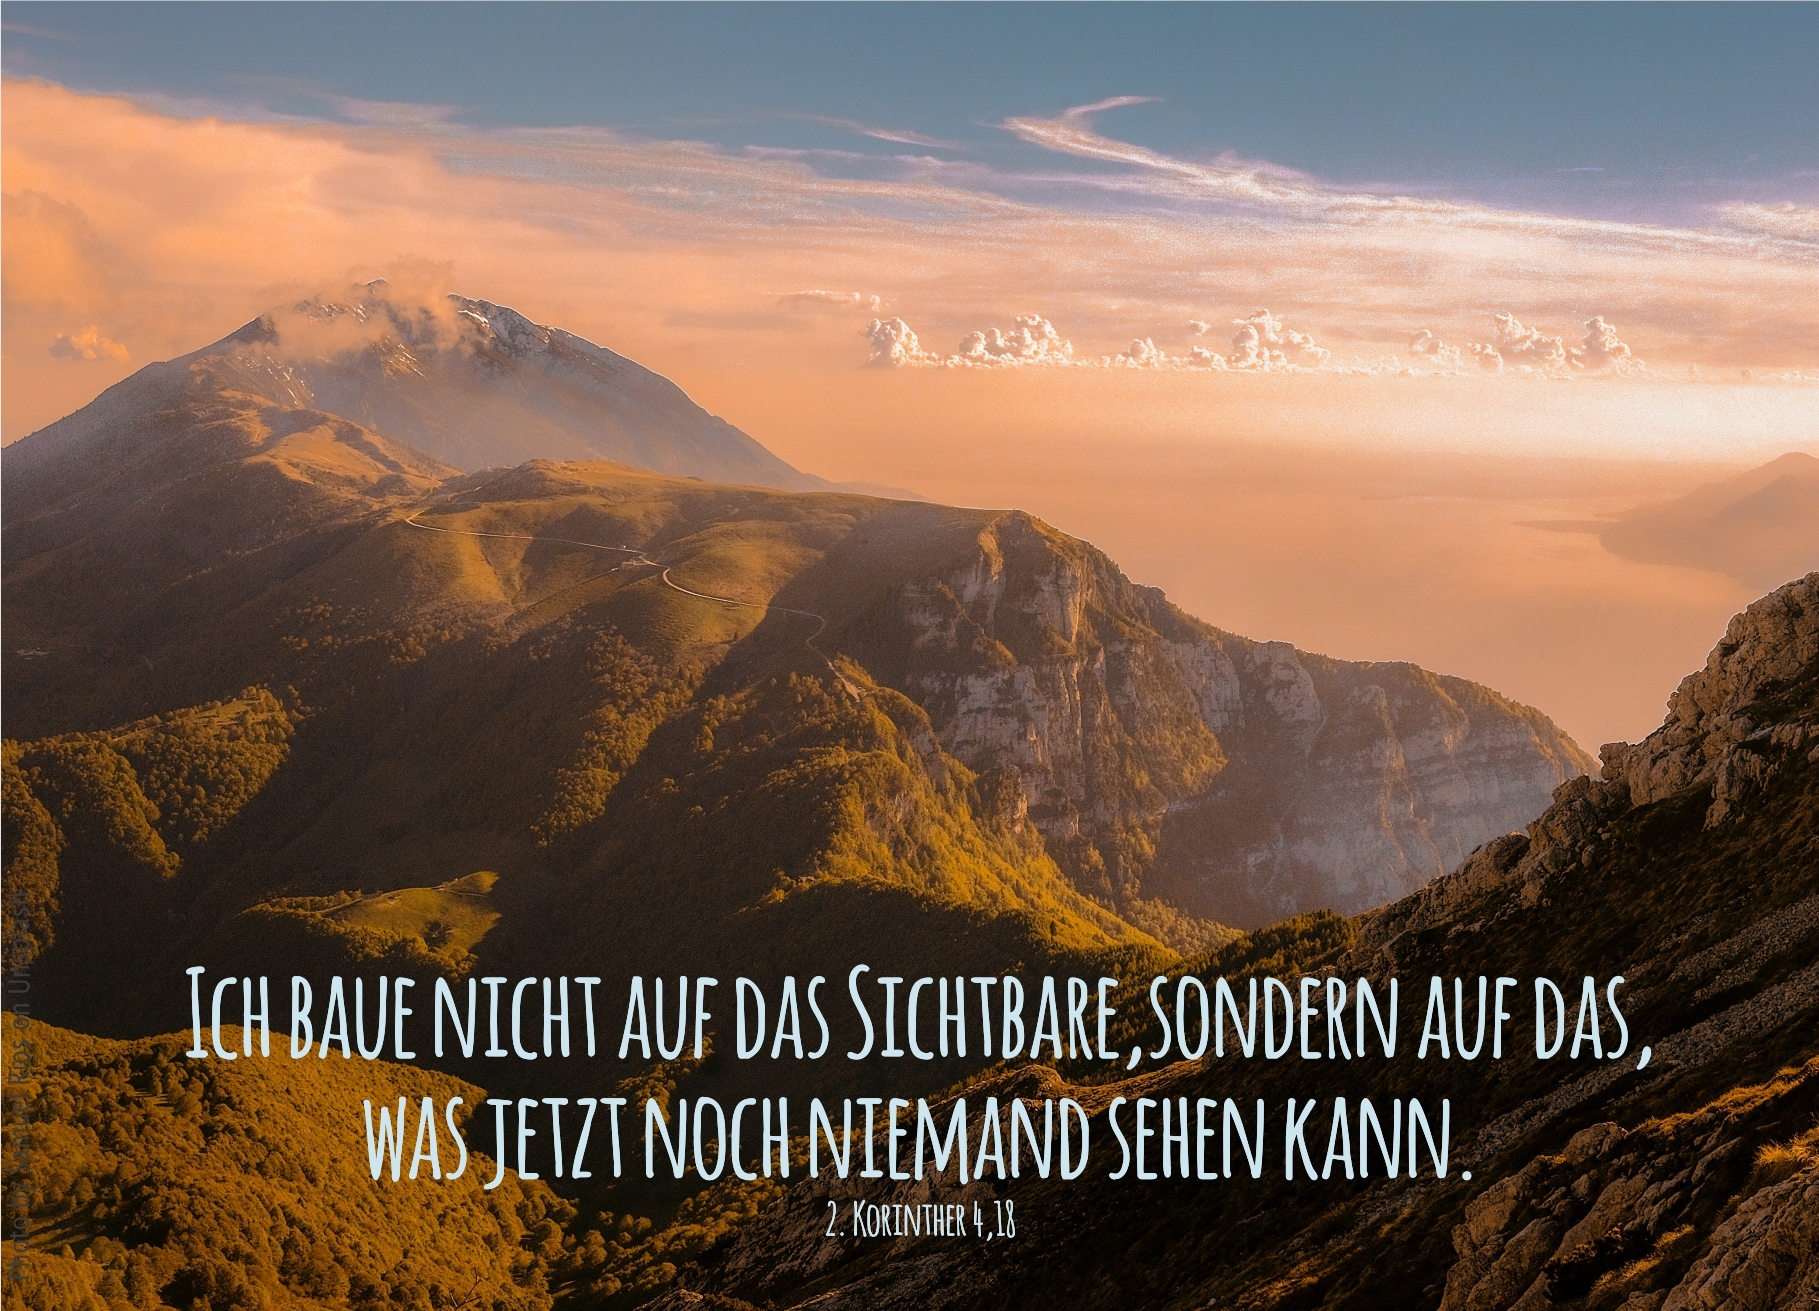 alt="berglandschaft_und_wolken_erwartet_bibelhoerbuch_gott_antwortet"